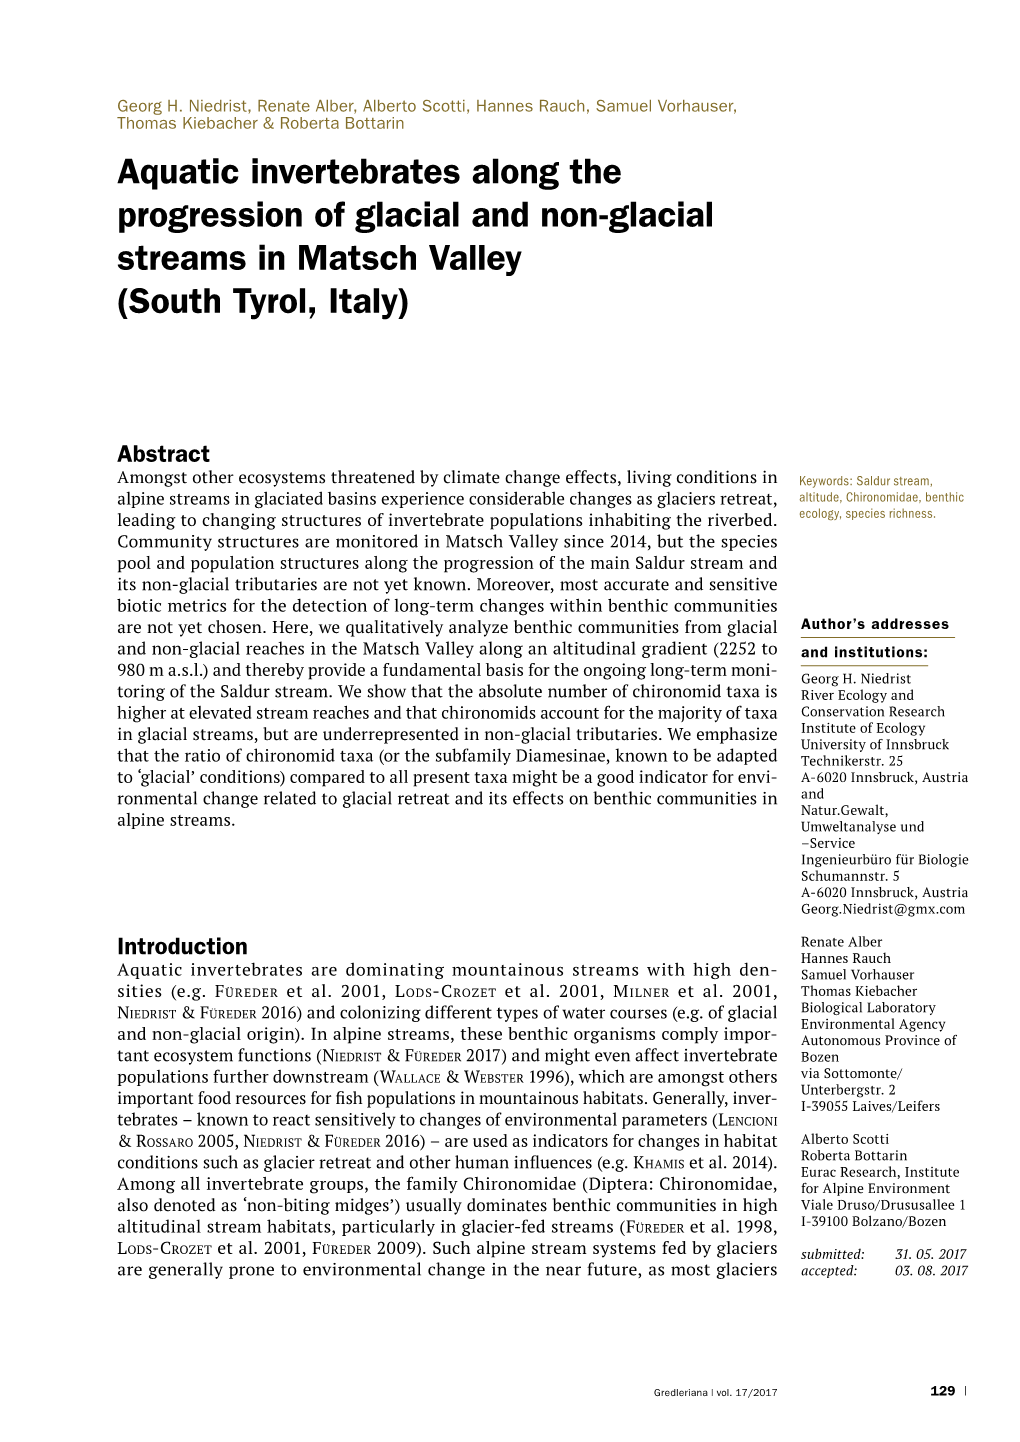 Aquatic Invertebrates Along the Progression of Glacial and Non-Glacial Streams in Matsch Valley (South Tyrol, Italy)